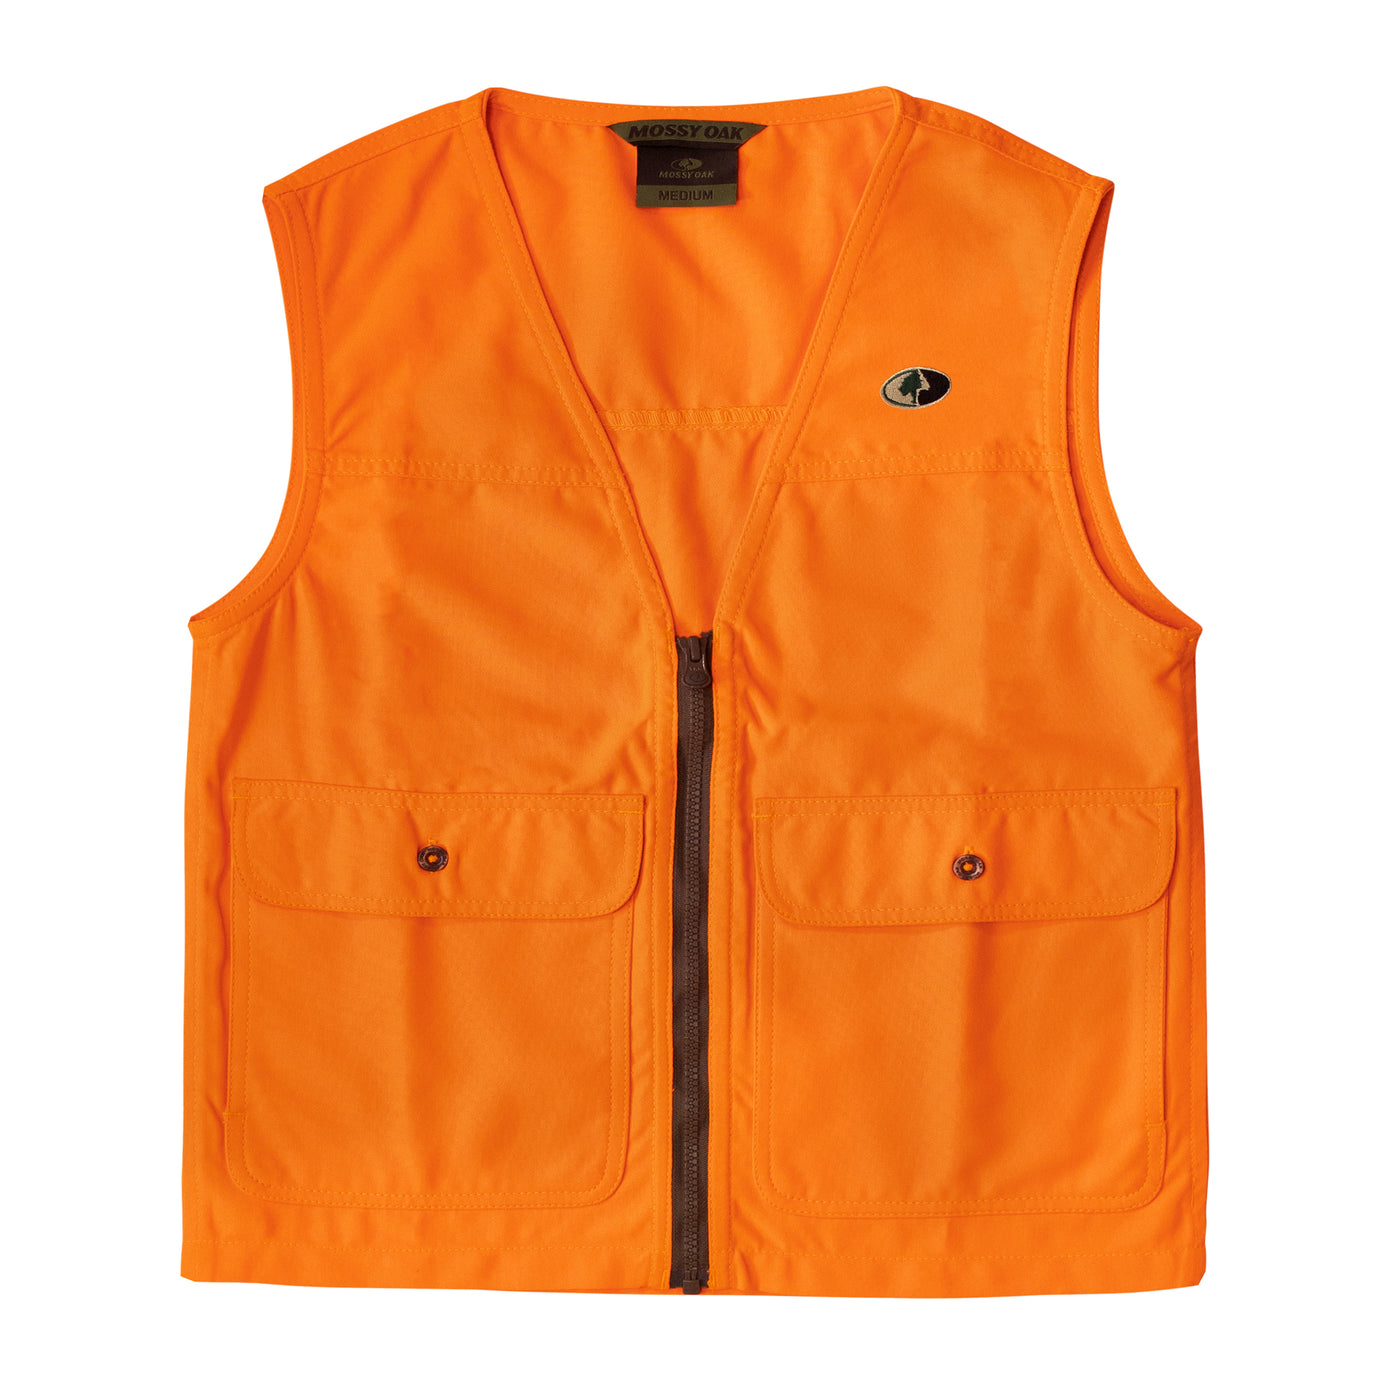 Mossy Oak Orange Hunting Vest